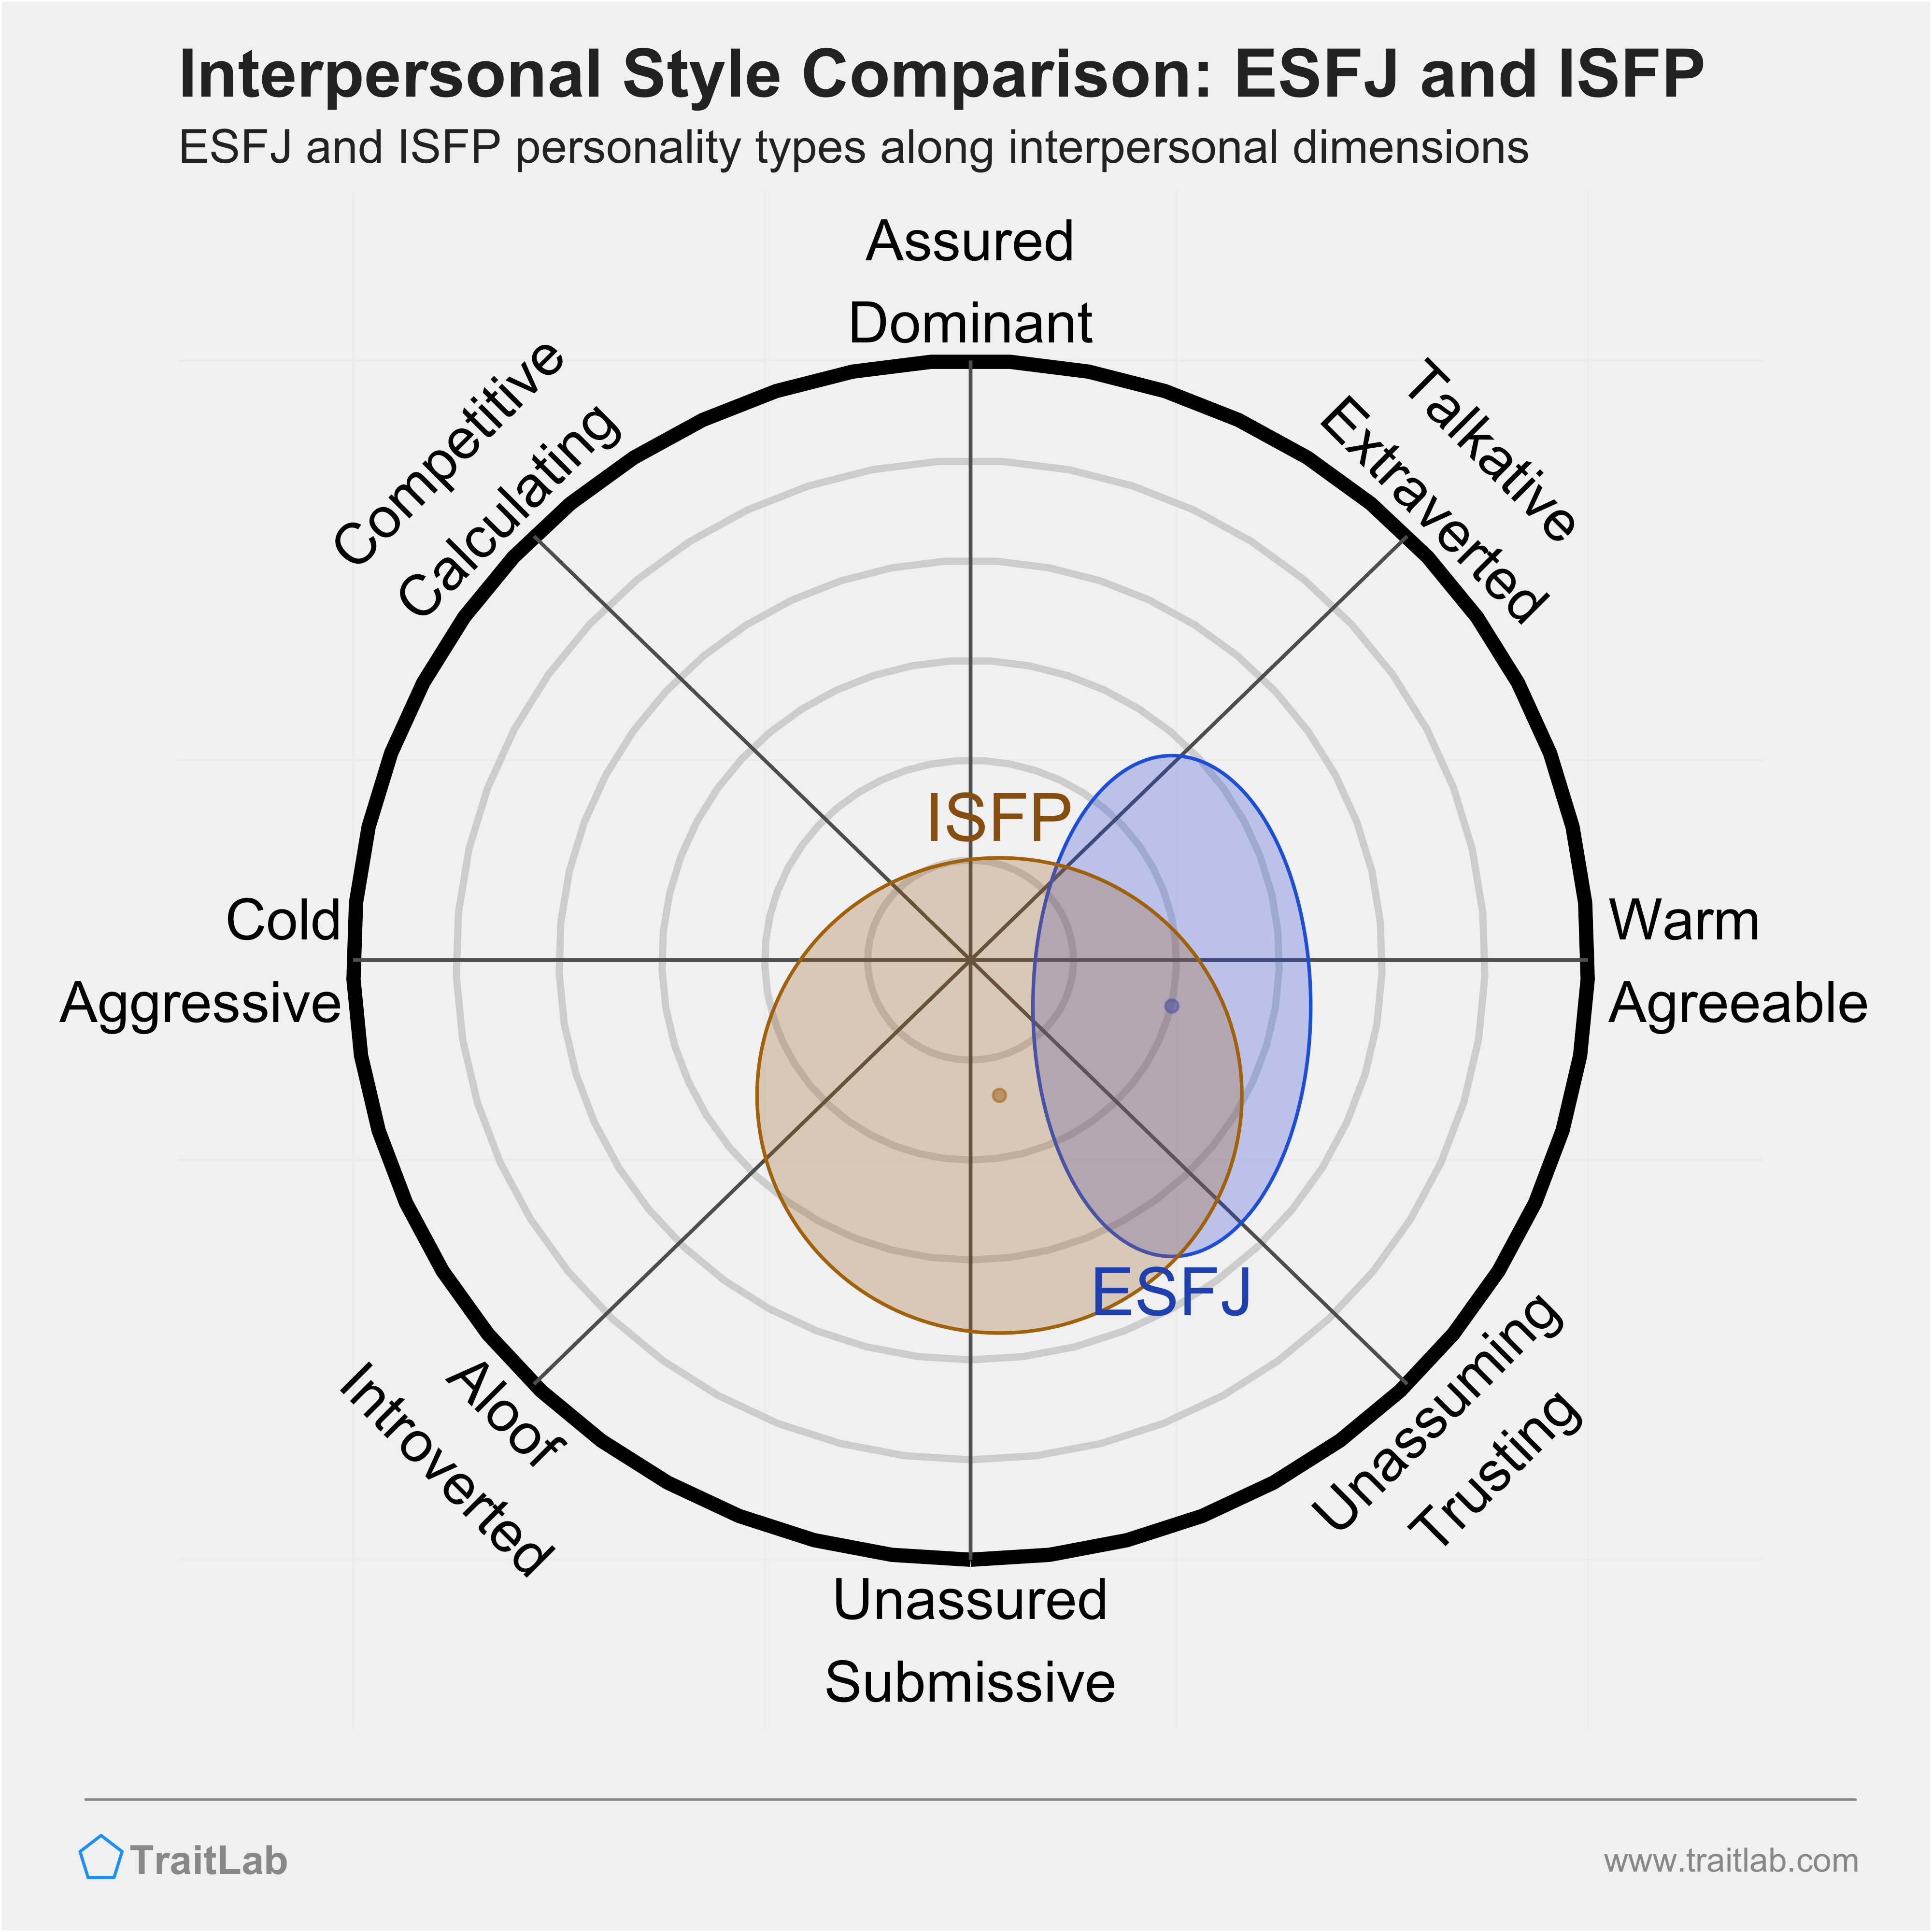 ESFJ and ISFP comparison across interpersonal dimensions